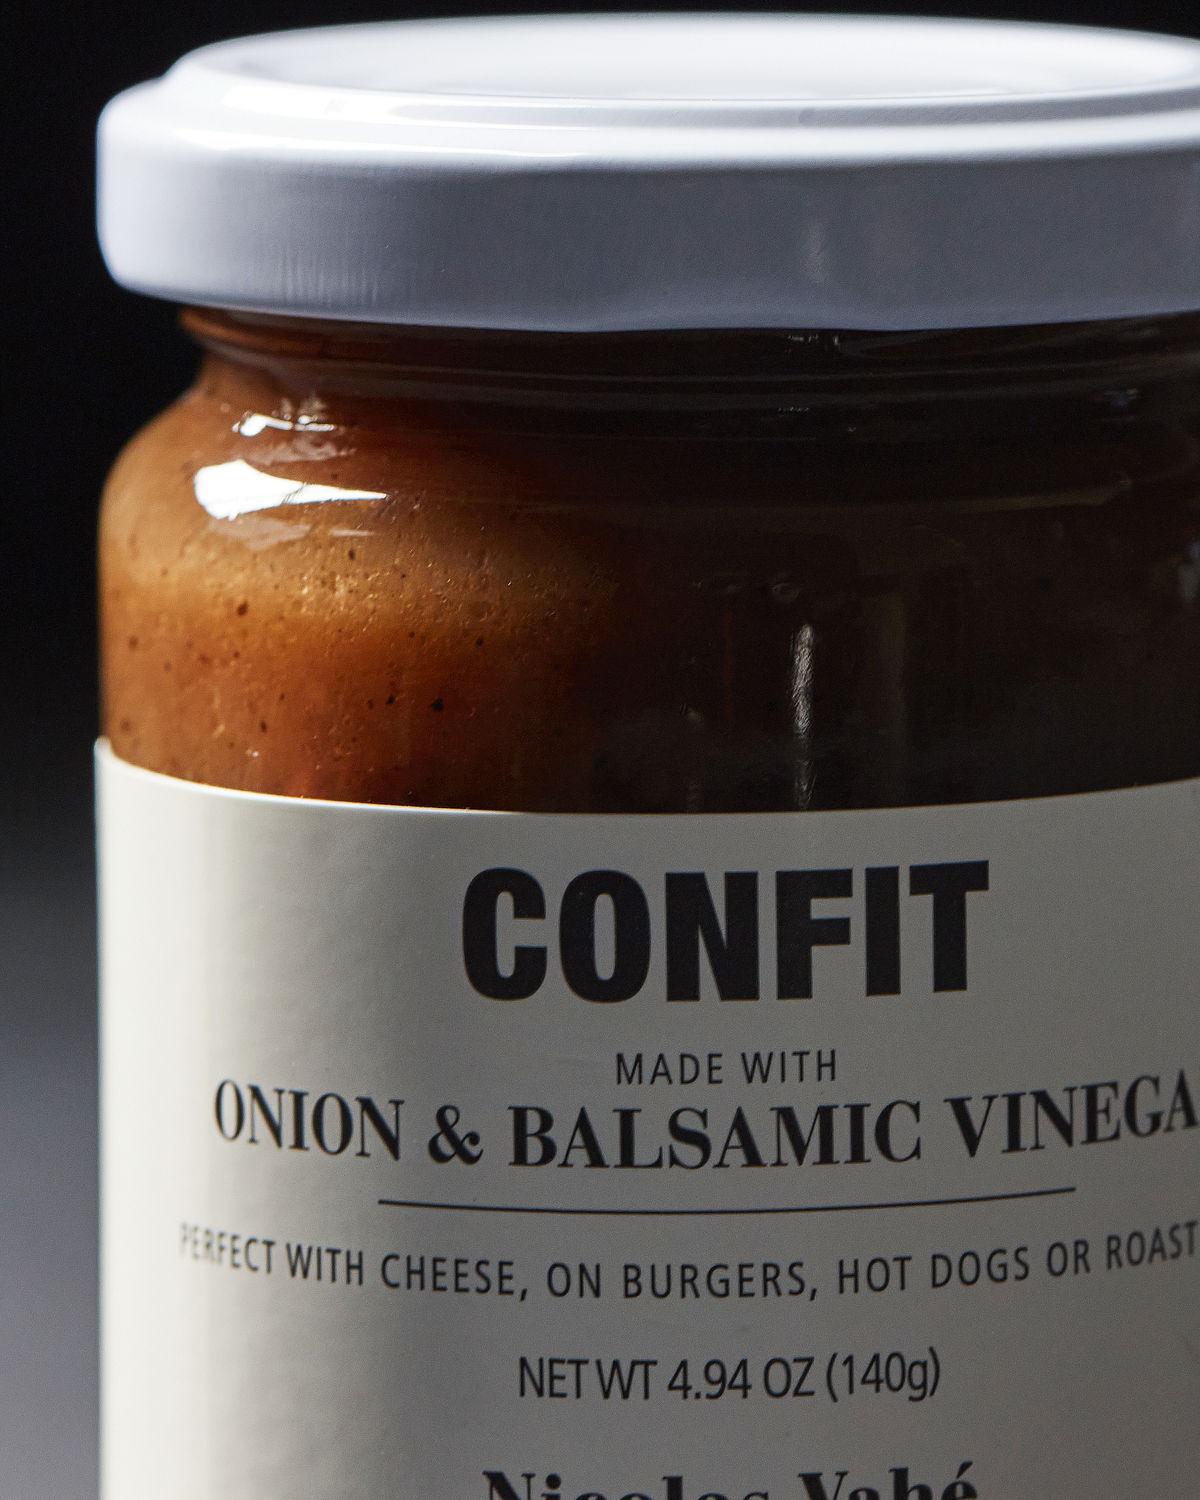 Confit, Onion & balsamic vinegar, 140 g.